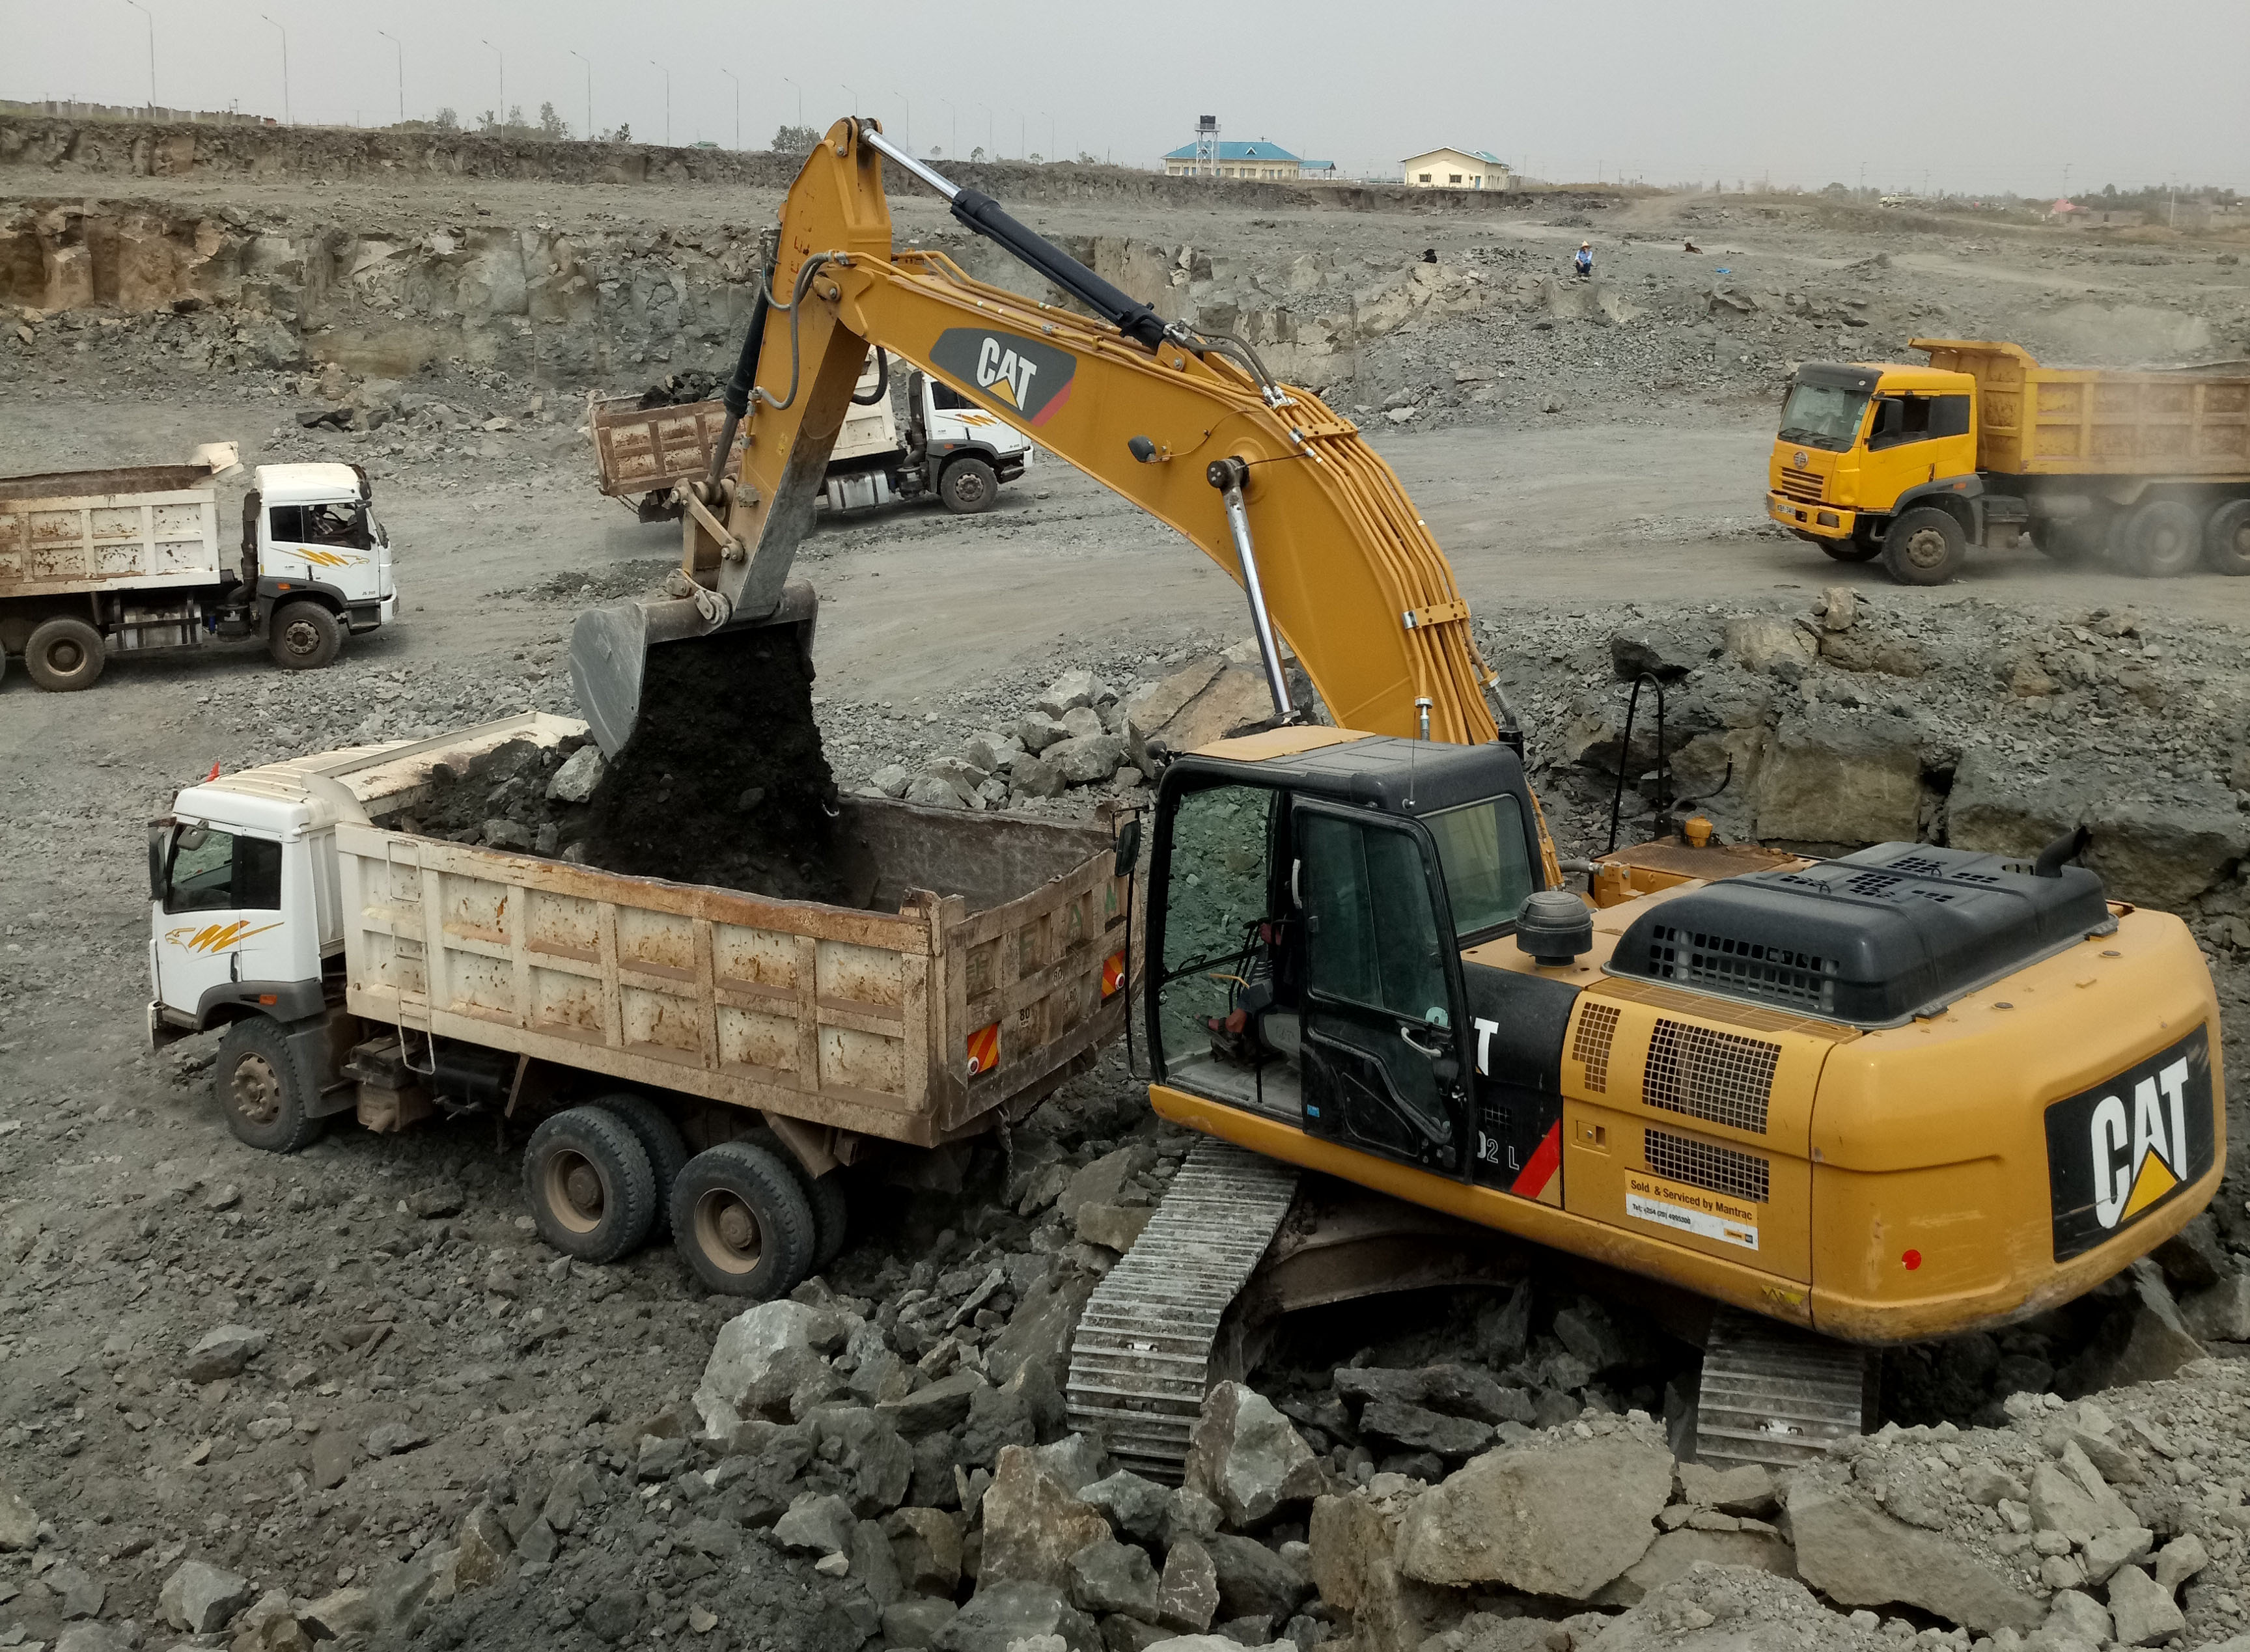 Cat excavator loading a dump truck